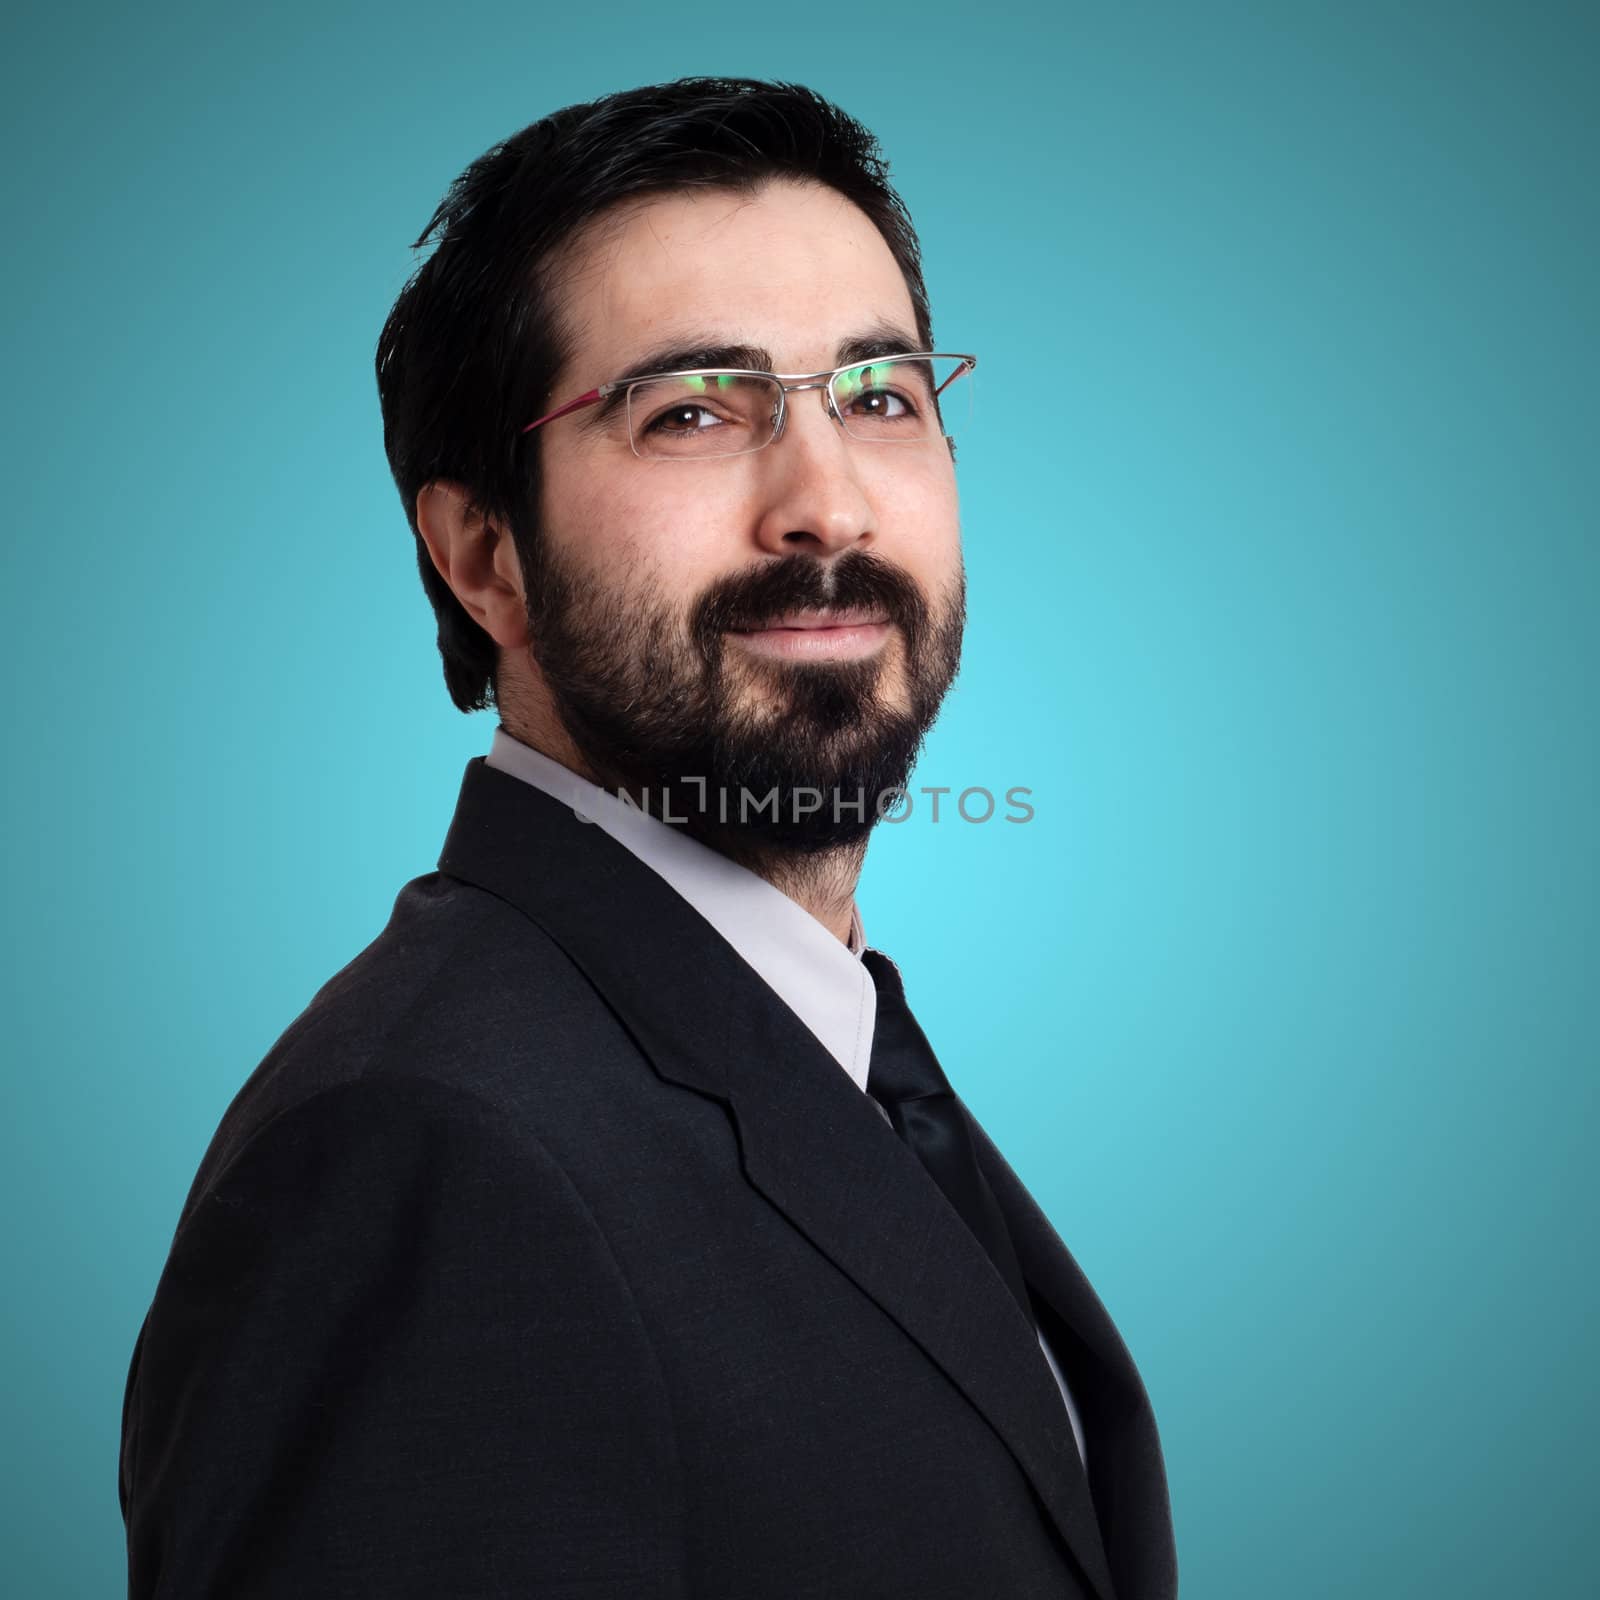 elegant bearded success business man on blue background